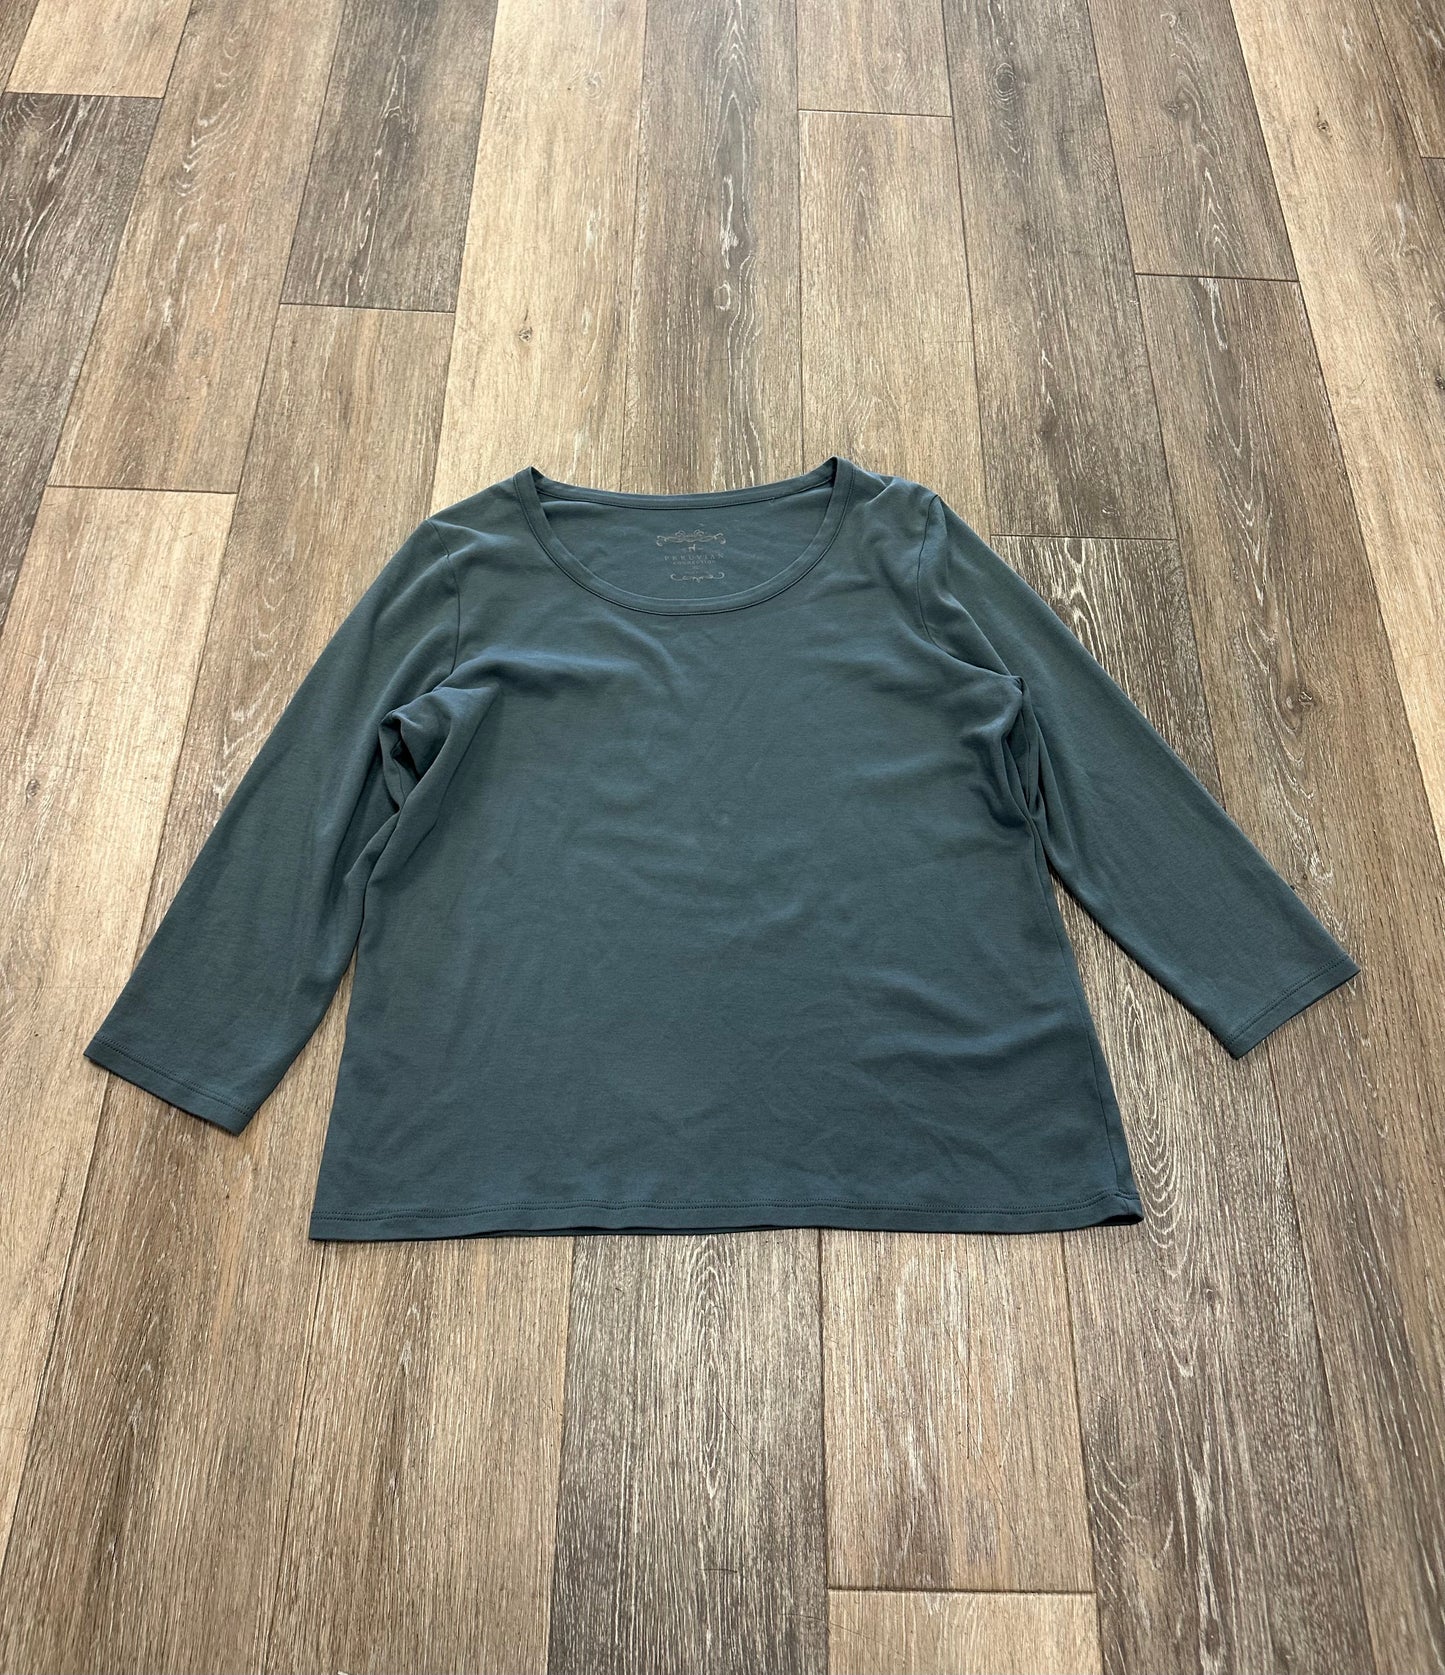 Green Top Long Sleeve Designer Peruvian Connection, Size Xl